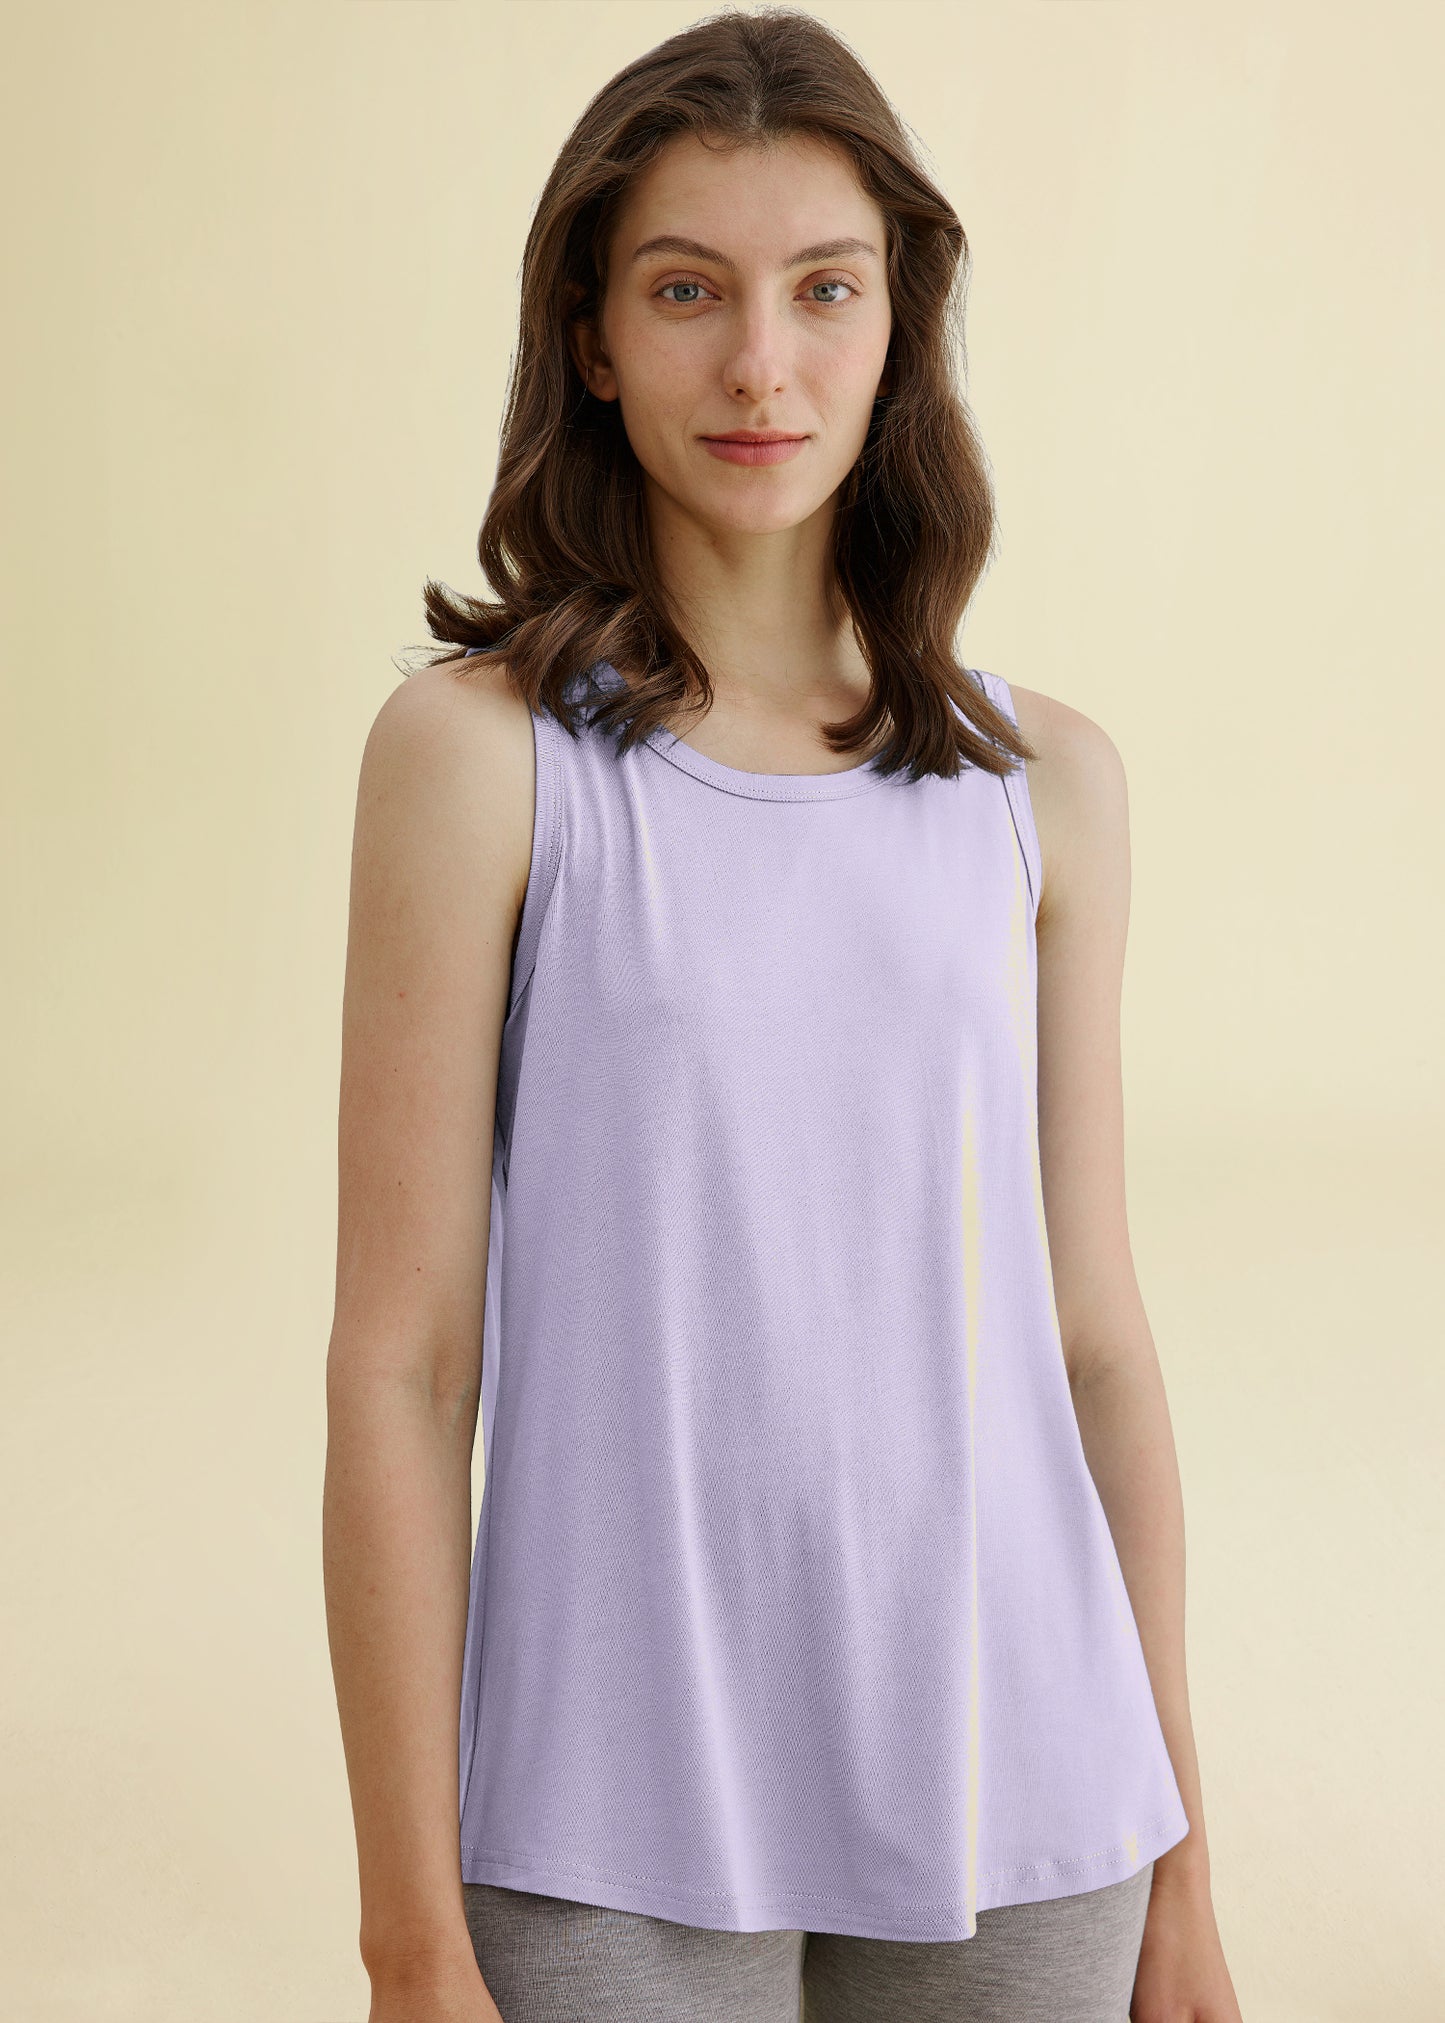 Women's Bamboo Viscose Sleep Tank Top Sleeveless Pajamas Shirt